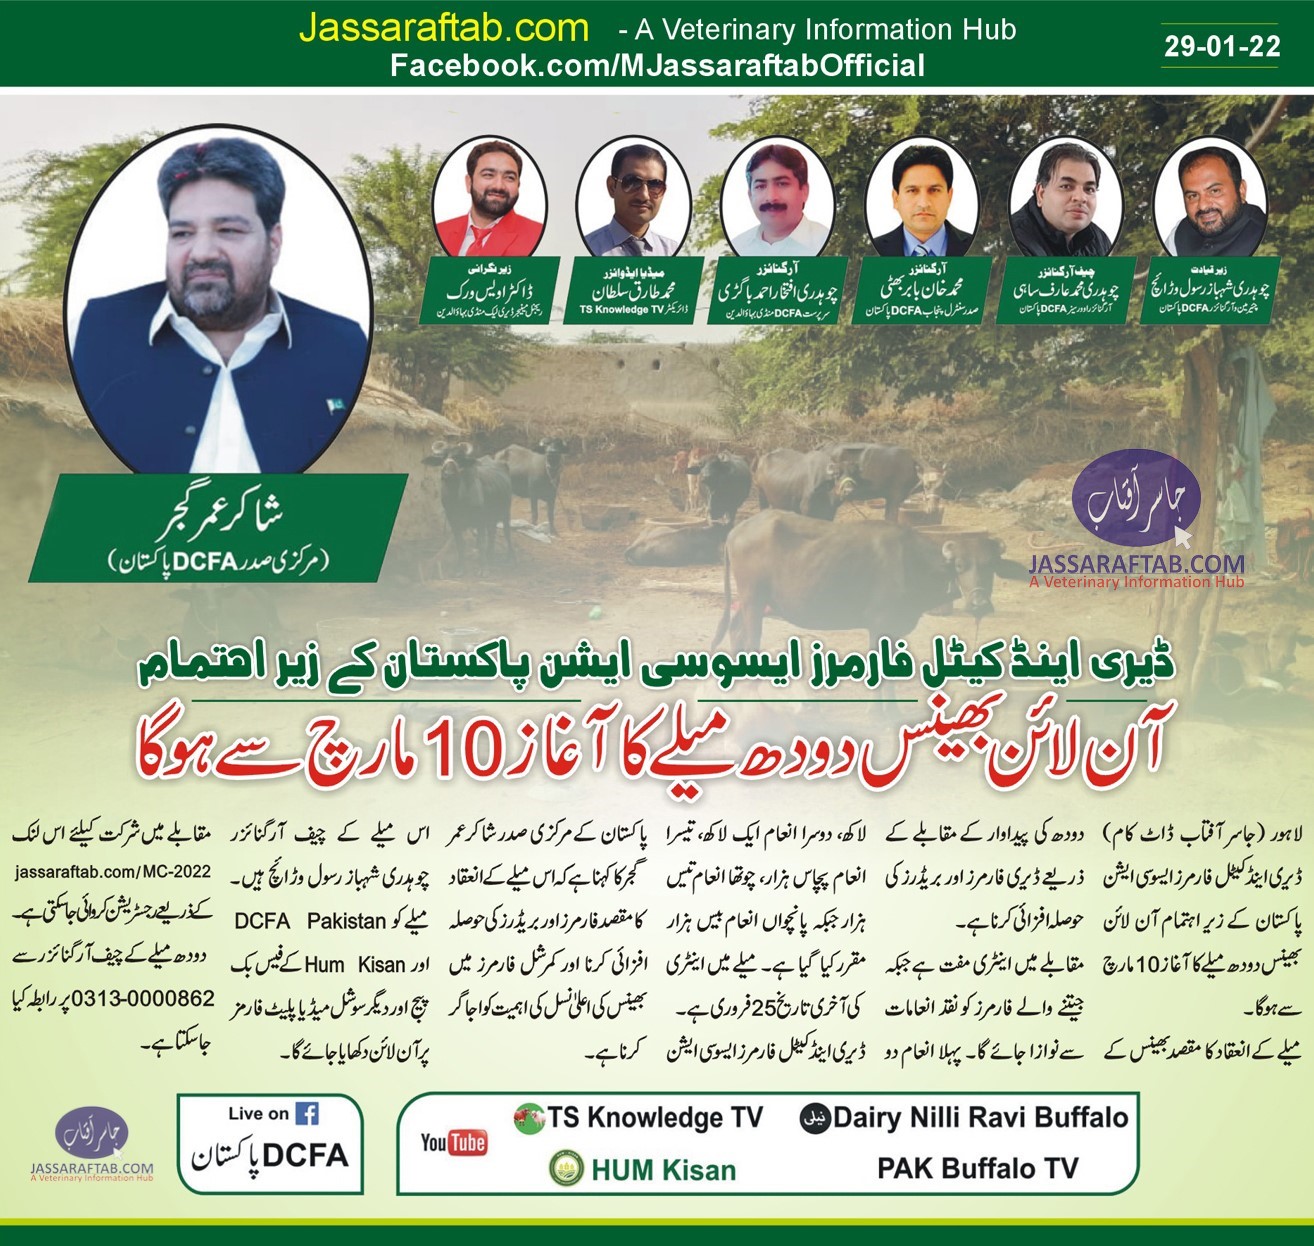 Online Milk Competition | DCFA Pakistan to organize online buffalo milk competition